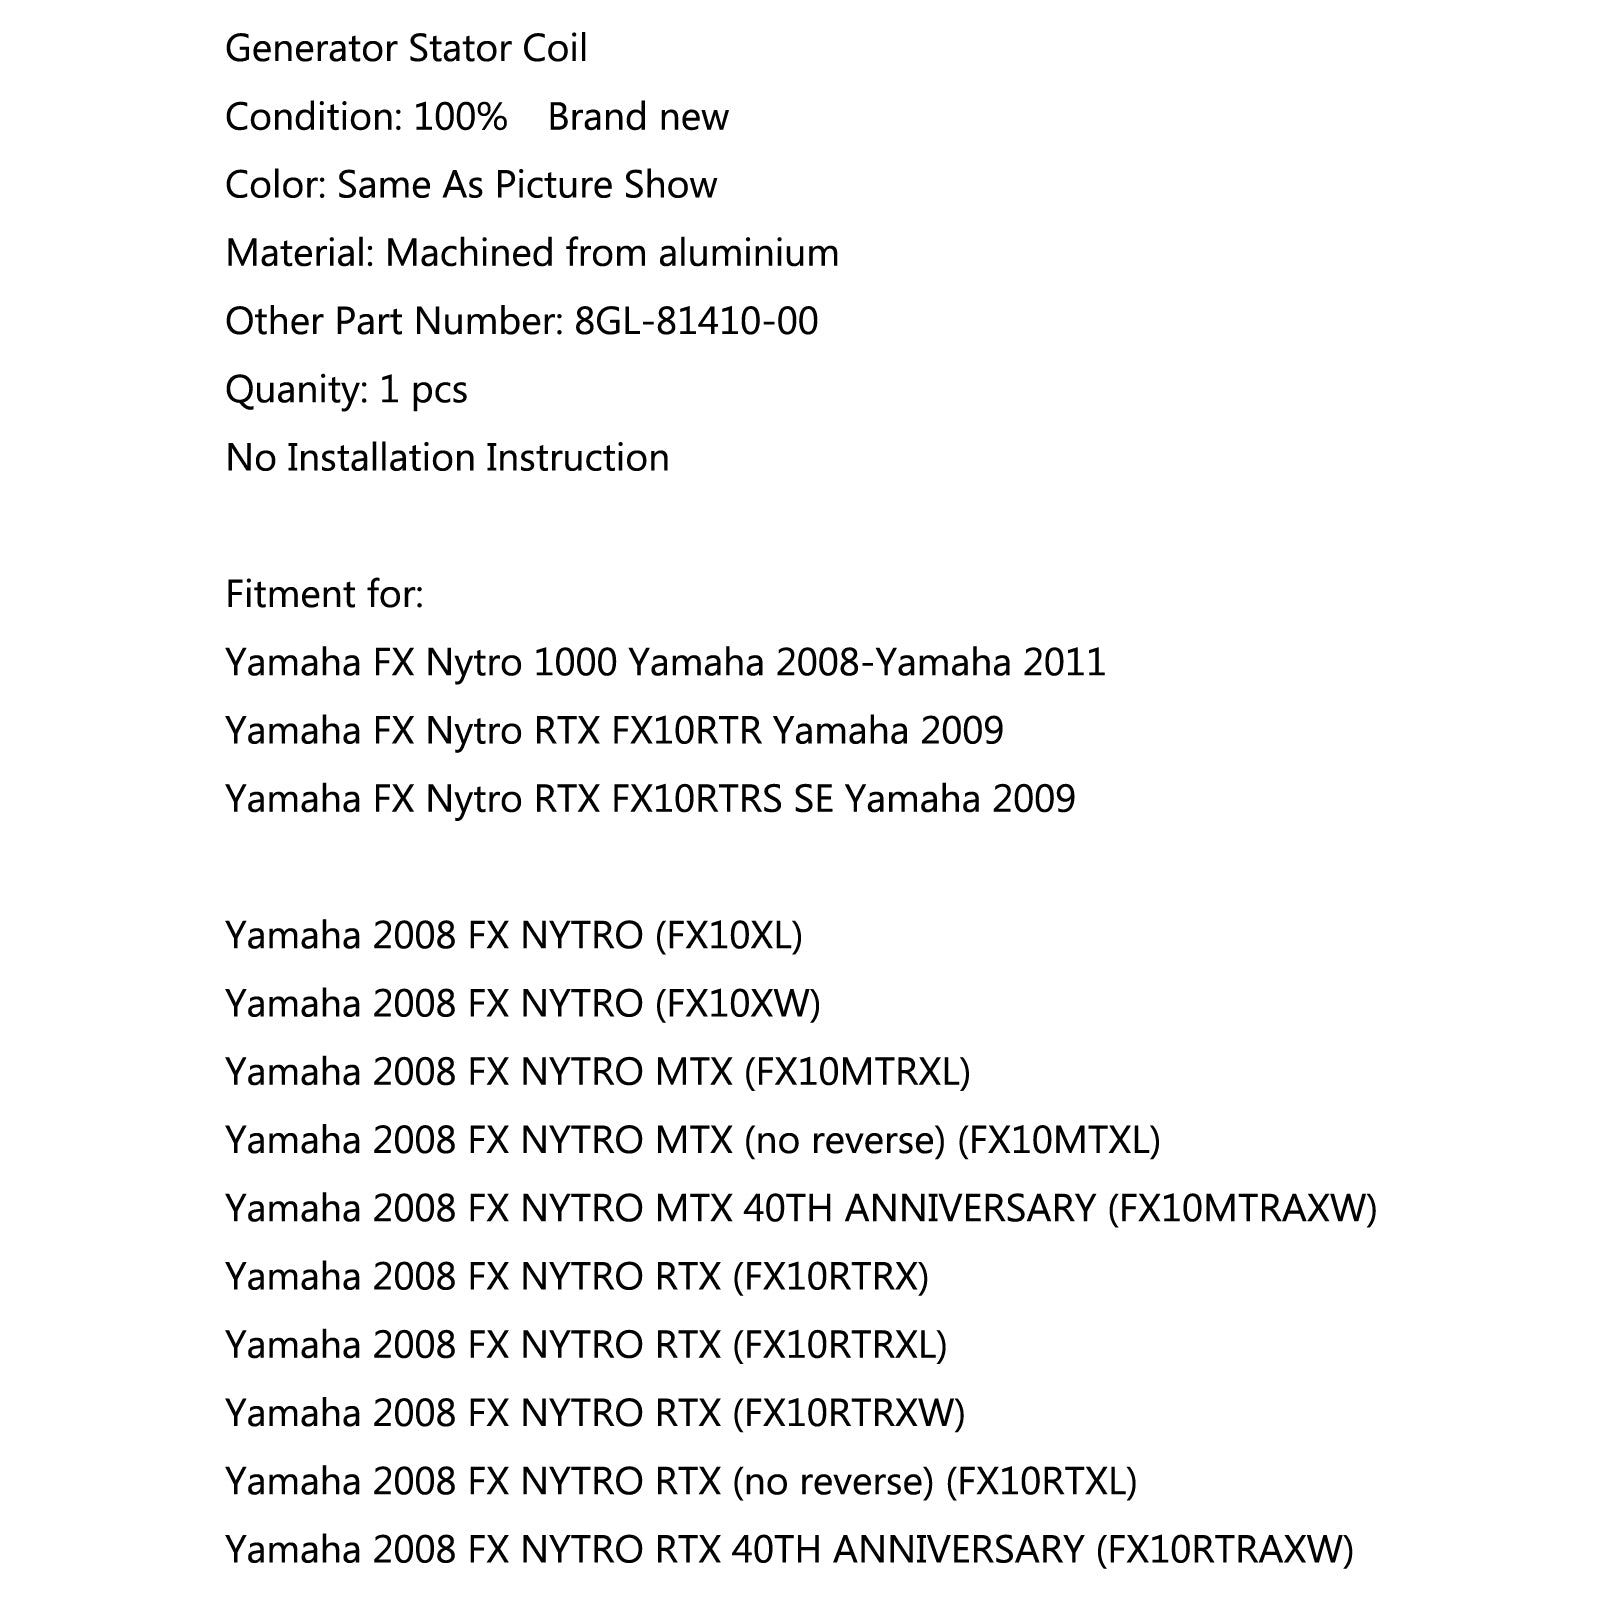 Generator Stator Coil For Yamaha 2011 FX NYTRO(FX10AW) FX Nytro RTX FX10RTR 2009 via fedex